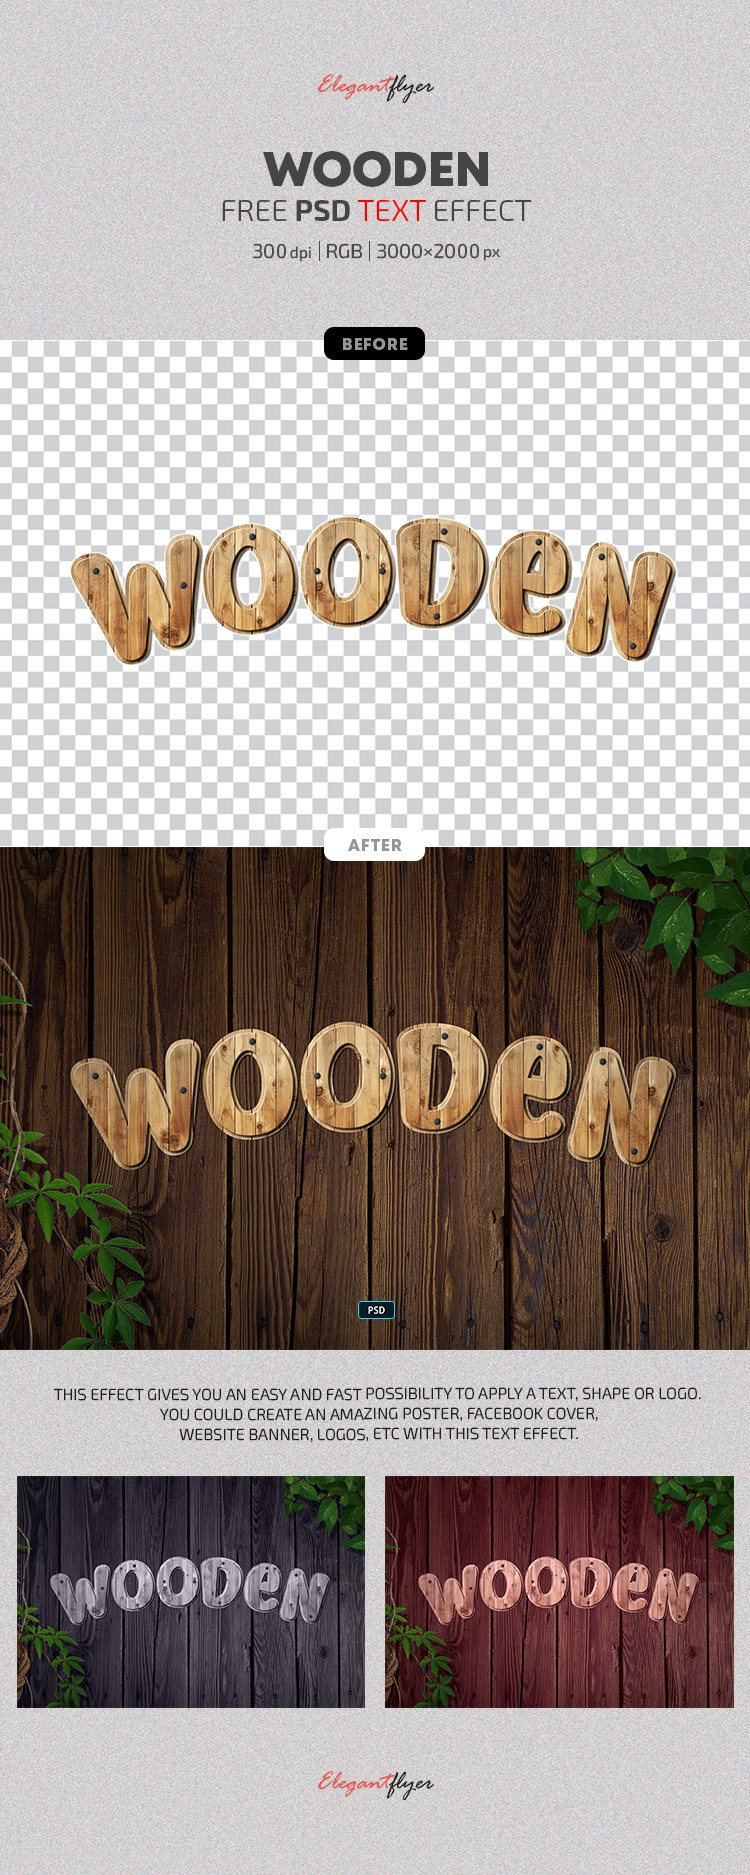 Wooden Text Effect by ElegantFlyer